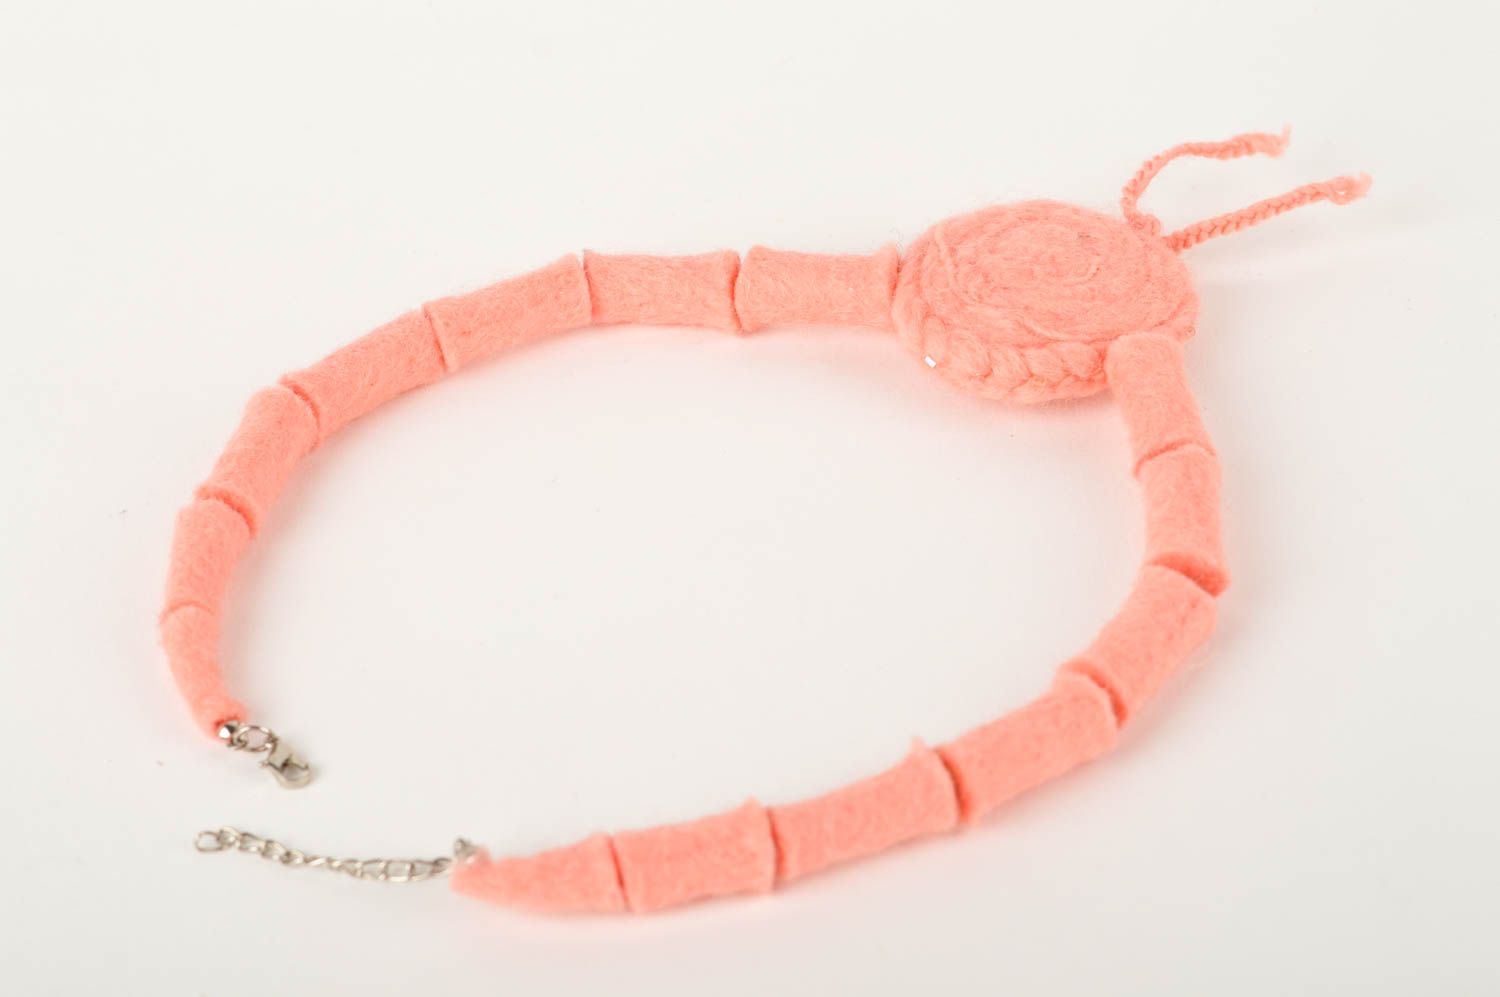 Handmade necklace designer woolen necklace for women gift ideas unusual jewelry photo 3